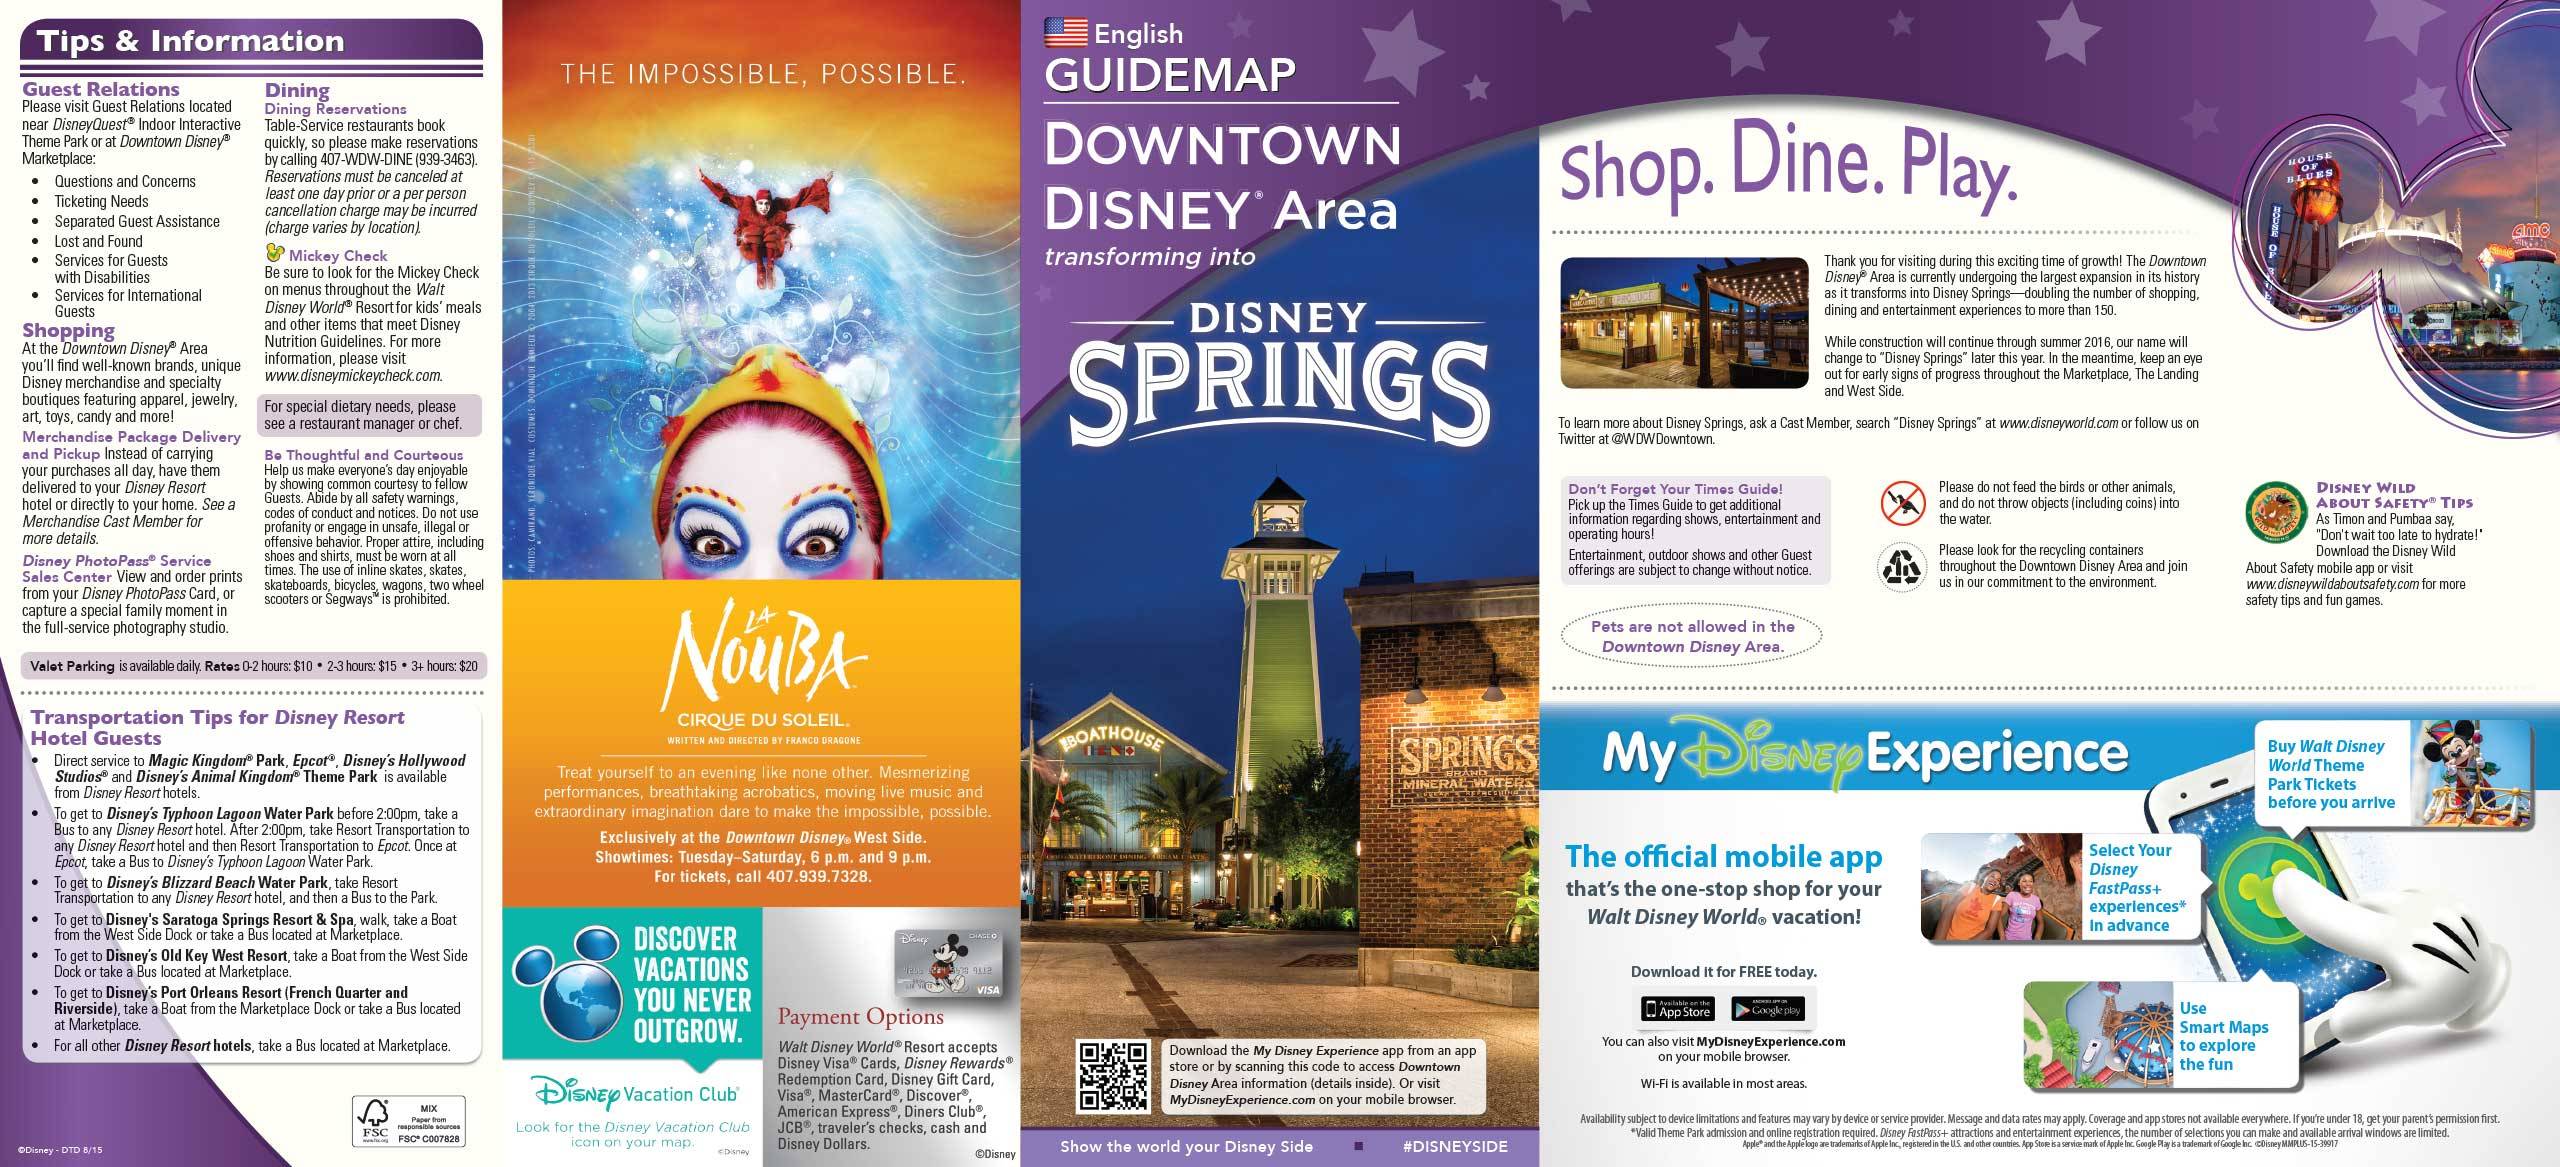 Disney Springs - Downtown Disney Guide Map Aug 2015